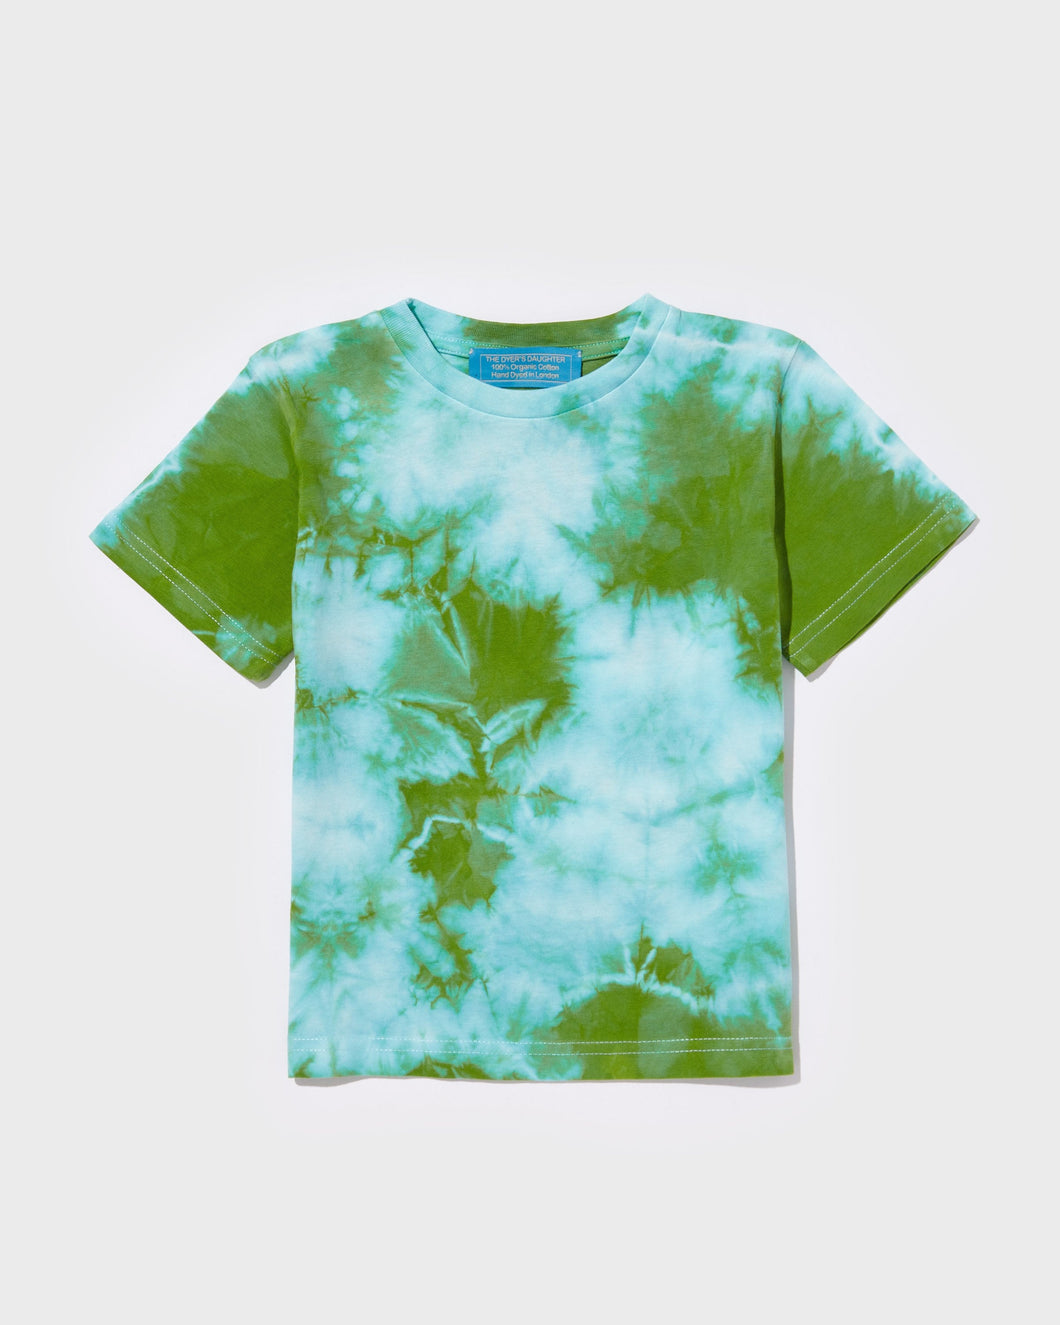 THE MARSHES Premium Organic Hand-dyed T-Shirt - KIDS